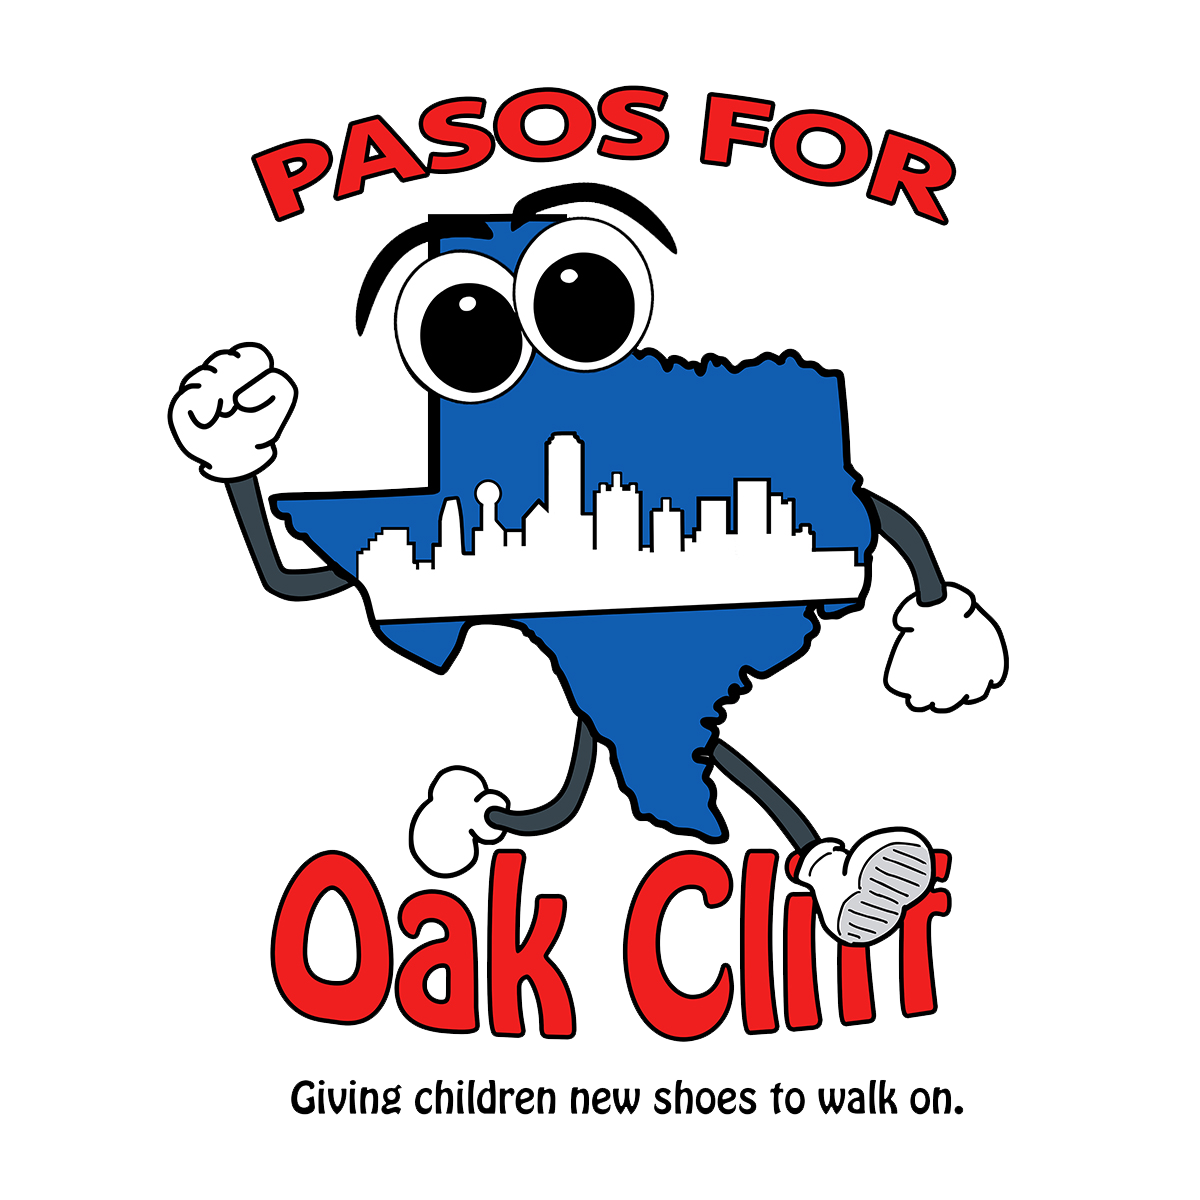 Pasos for Oak Cliff logo